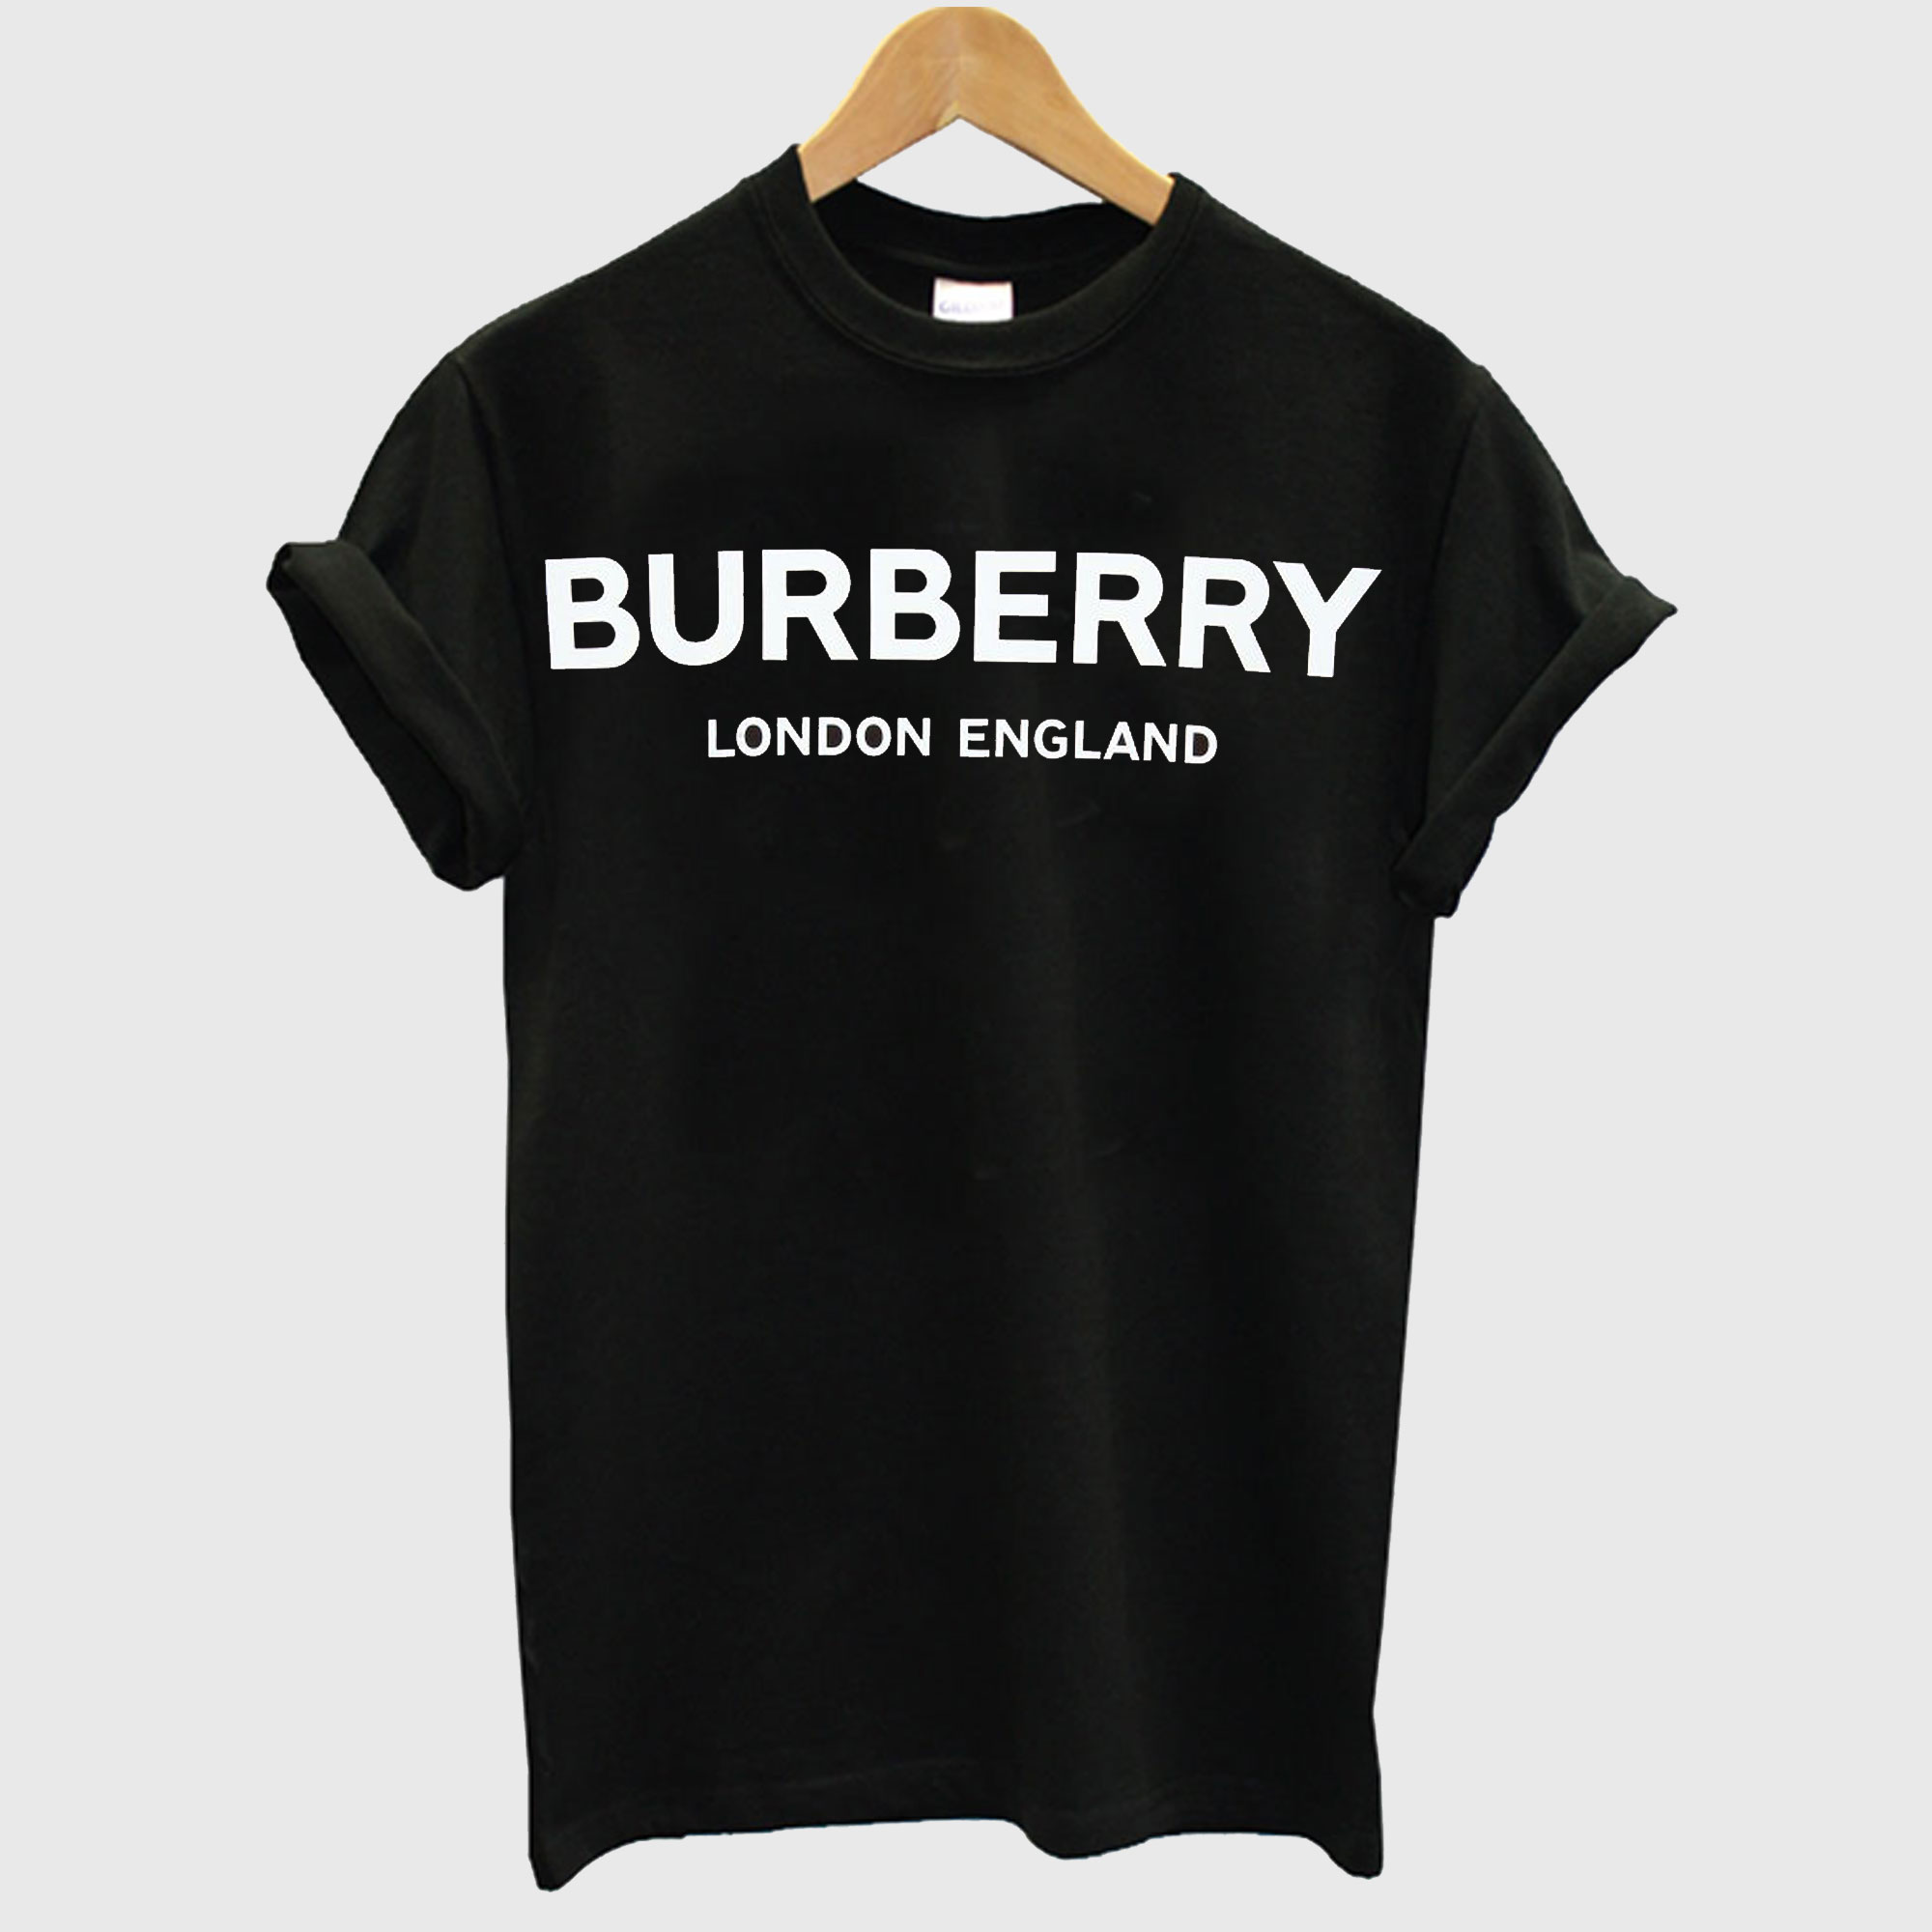 Burberry London England T Shirt